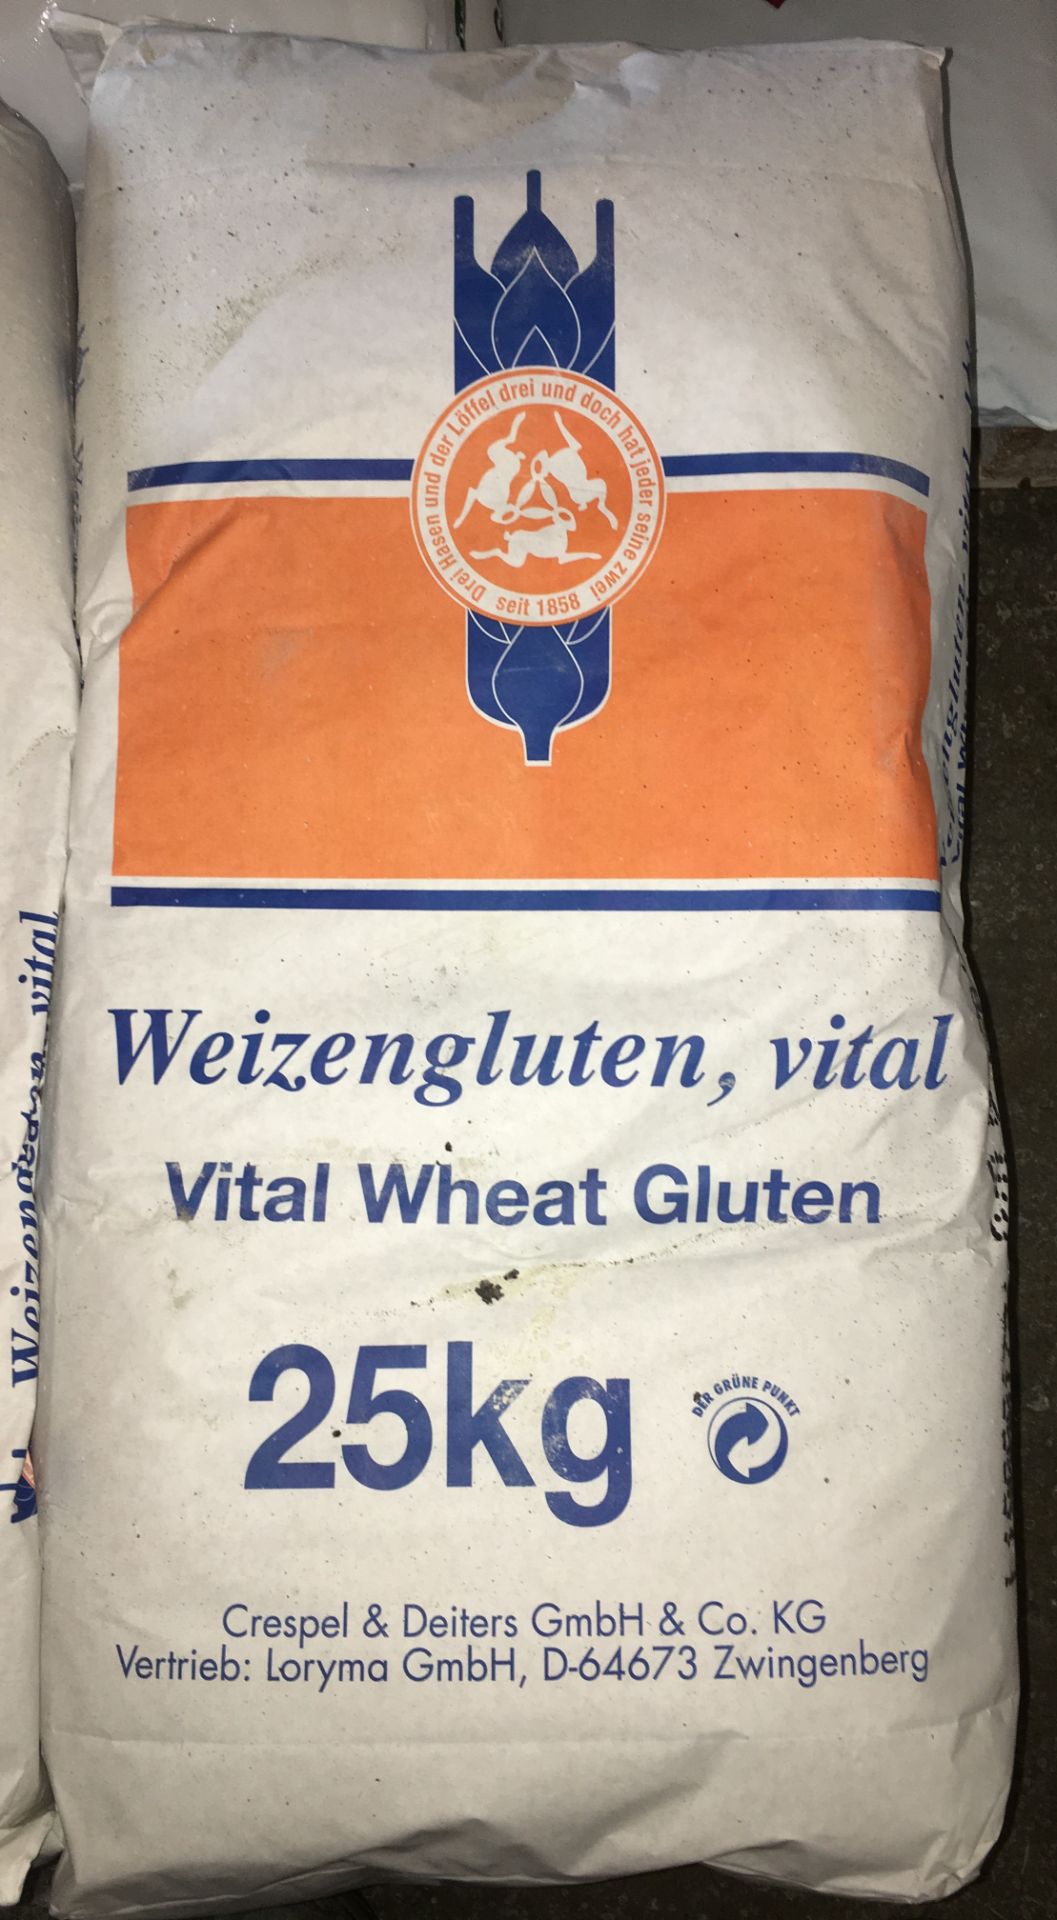 6 x 25kg Bags of Crespel & Deiters Vital Wheat Gluten - Bild 3 aus 3